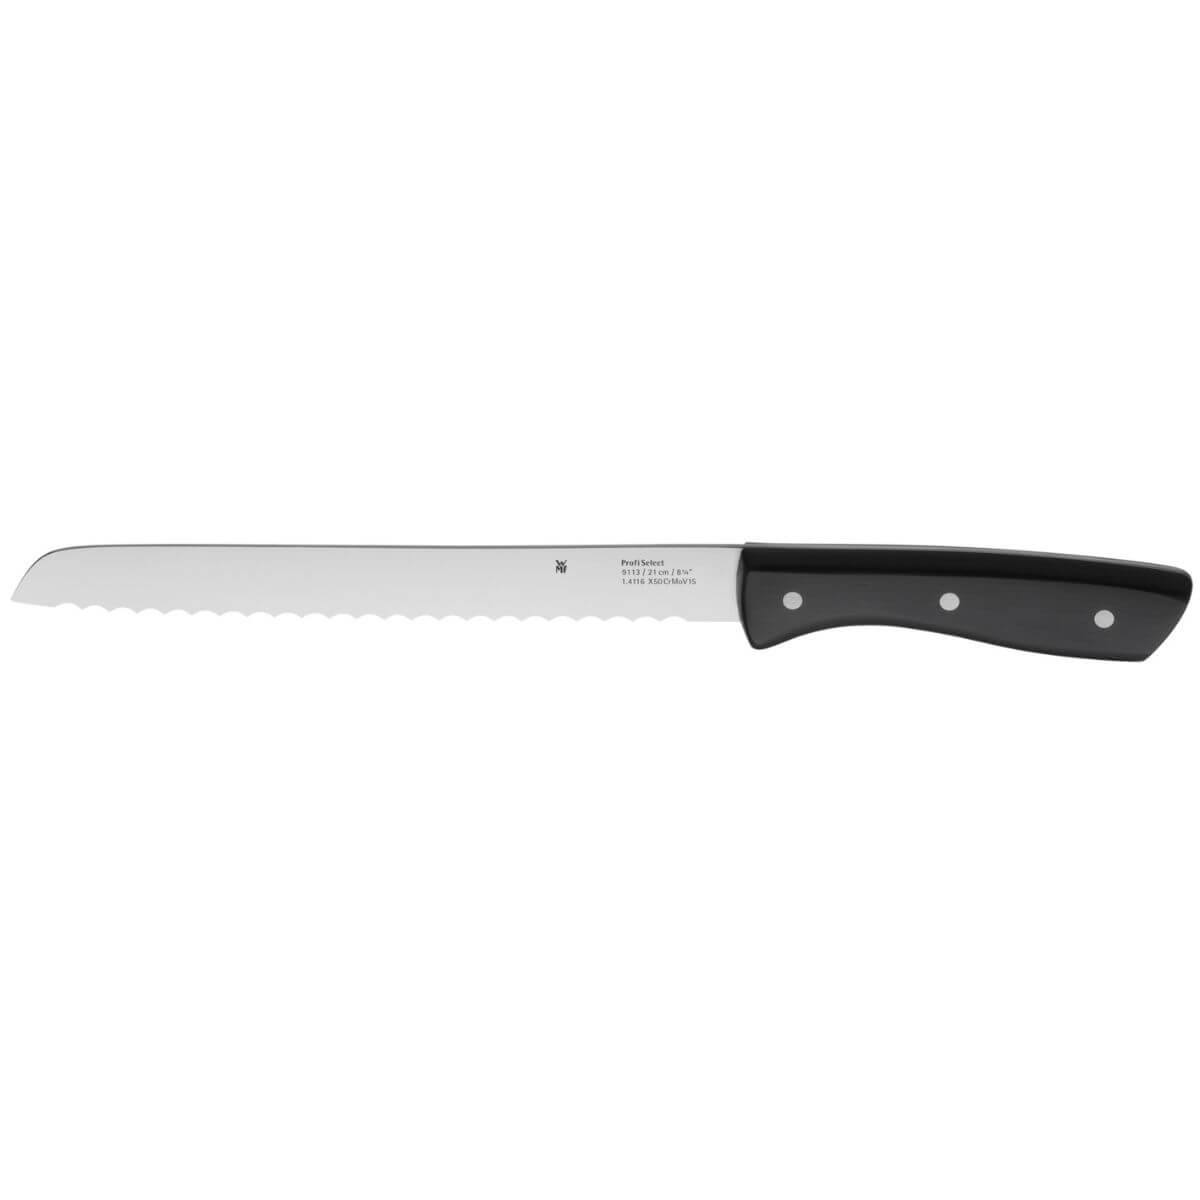 WMF Profi Select Bread Knife